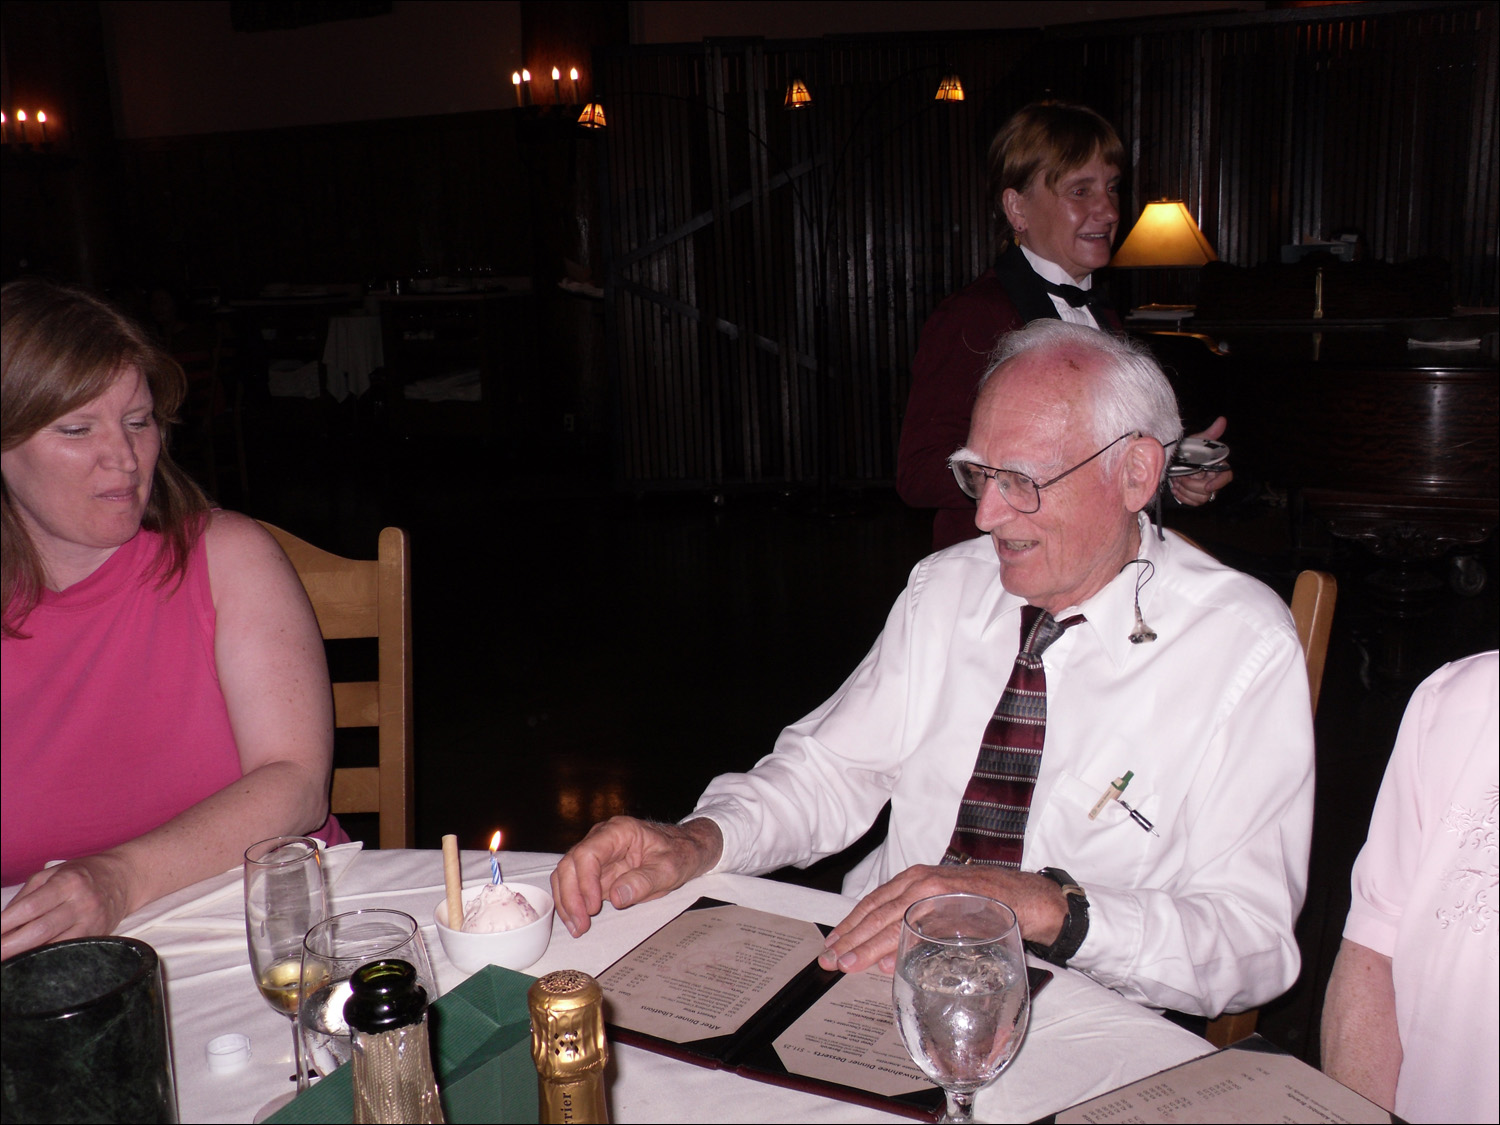 Dad's 80th Bday celebration @ the Awahnee dining room